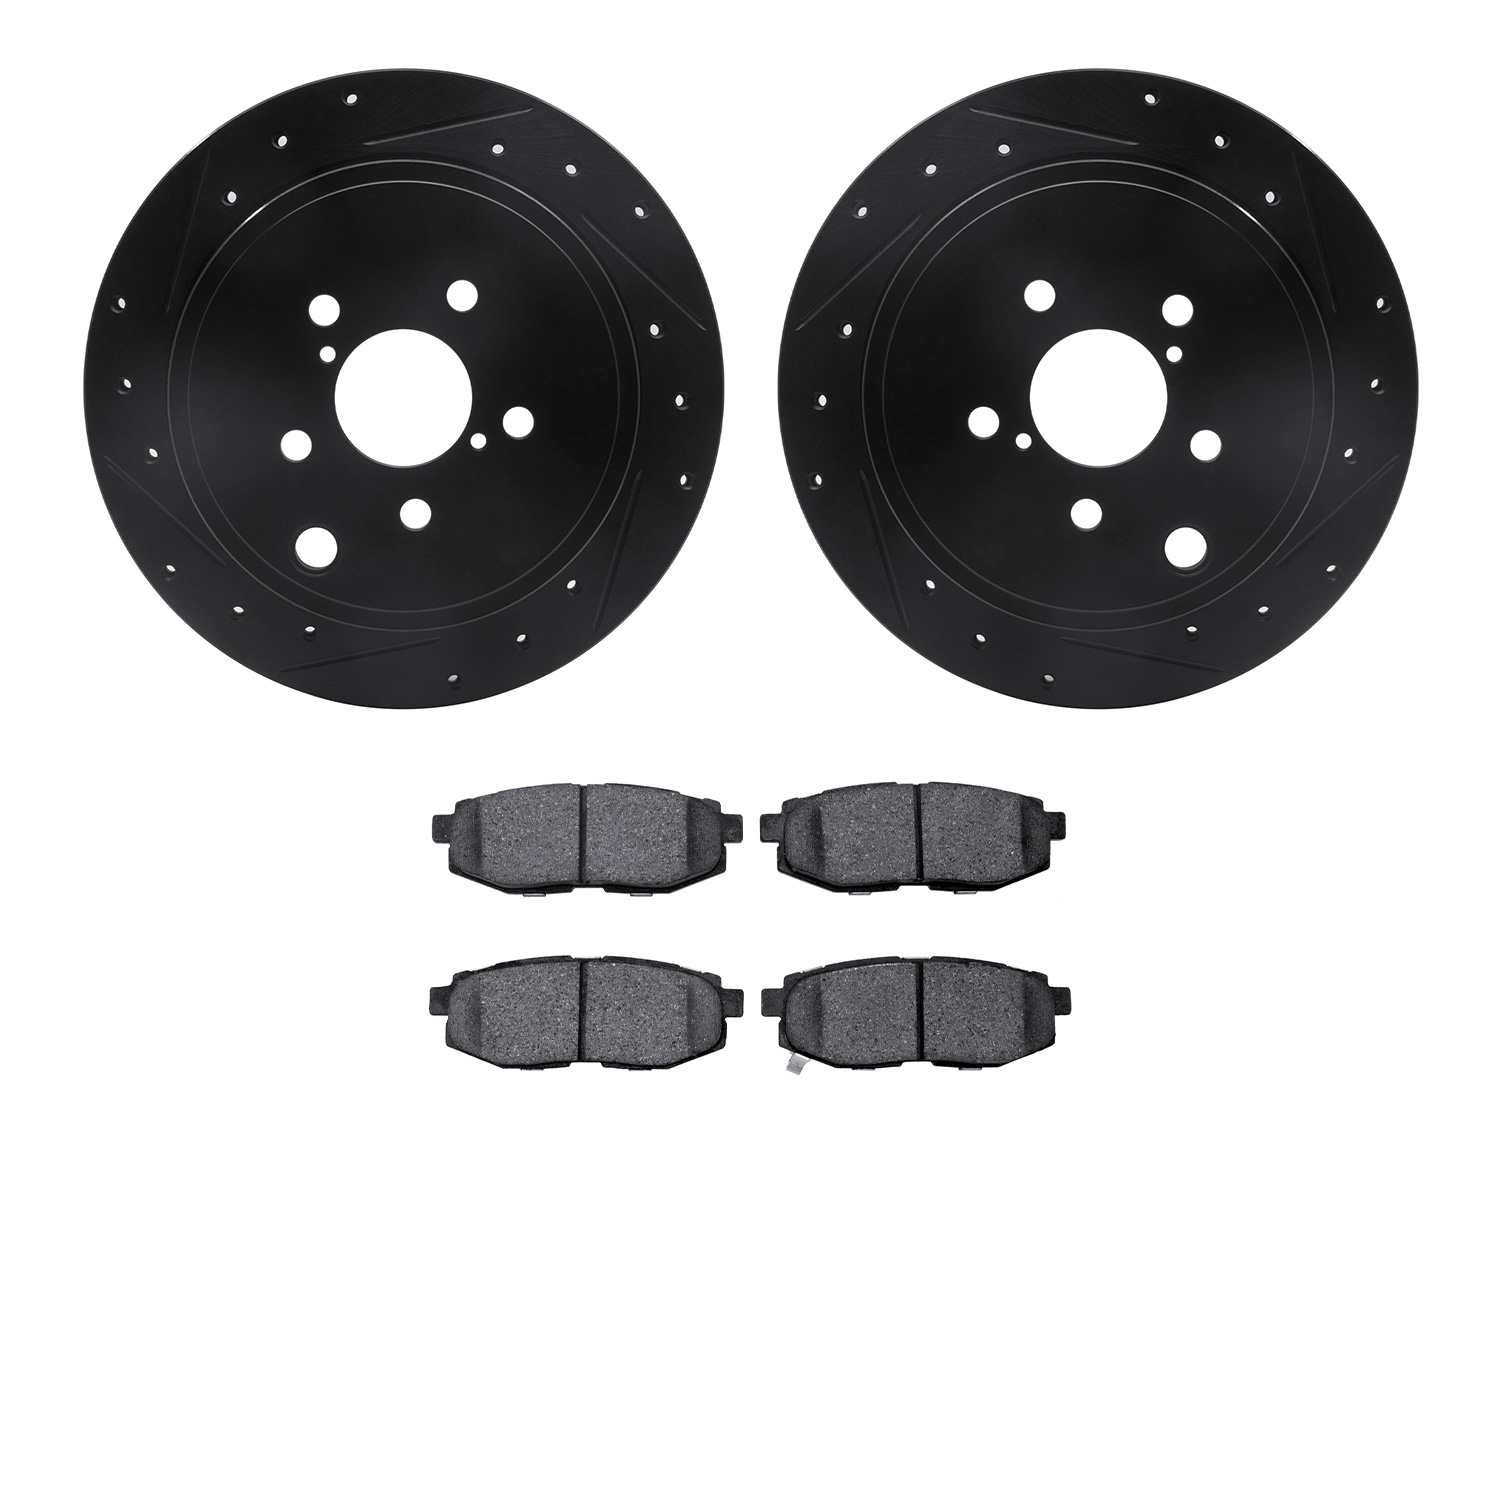 8302-13044 Drilled/Slotted Brake Rotors with 3000-Series Ceramic Brake Pads Kit [Black], Fits Select Multiple Makes/Models, Posi